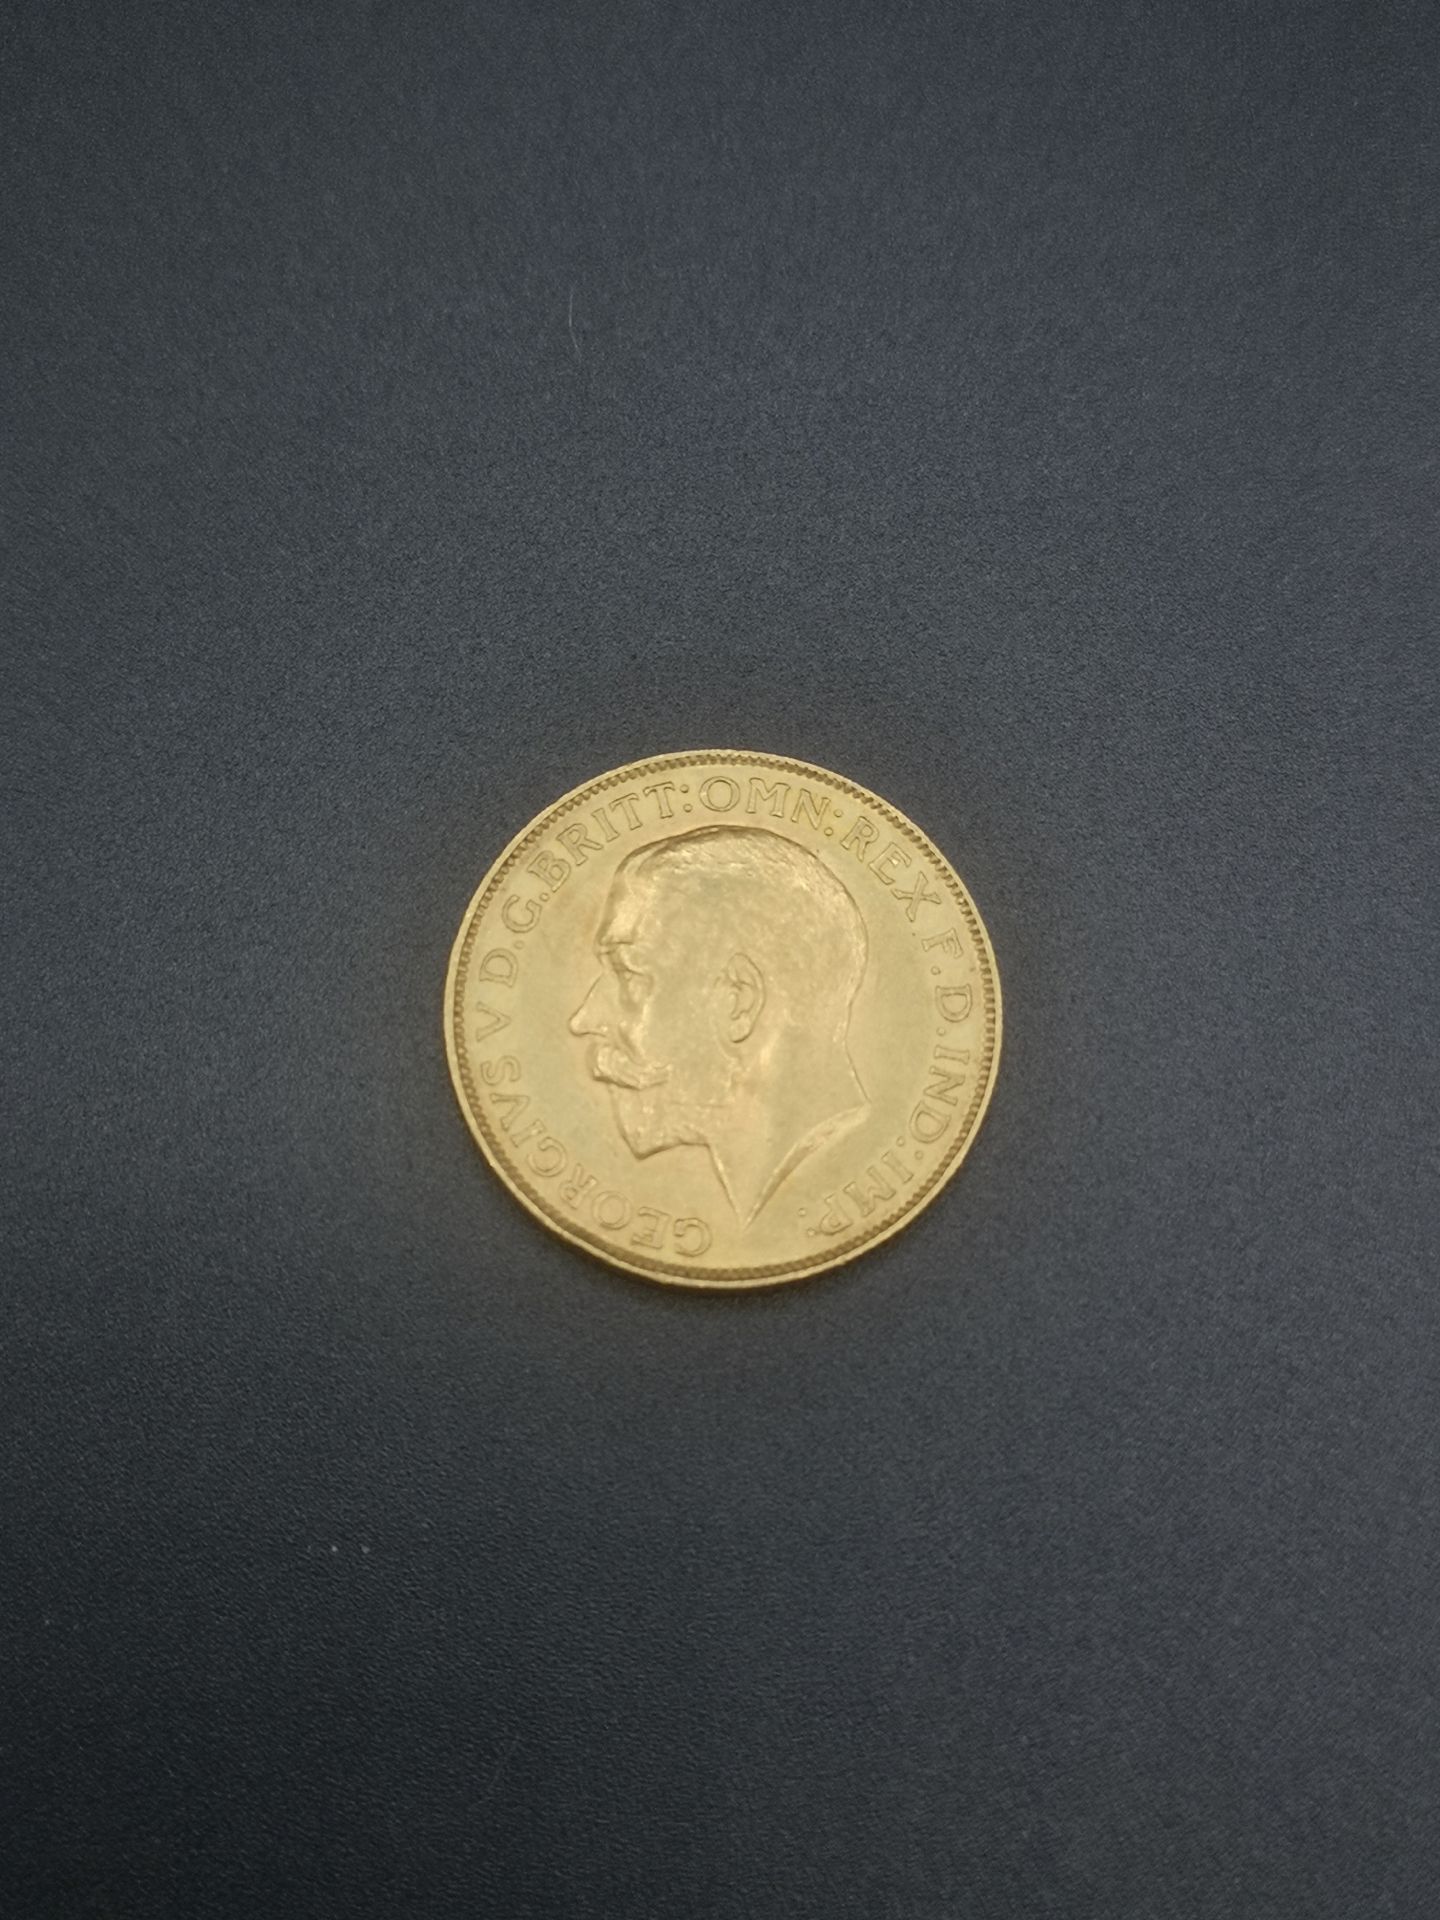 George V gold sovereign 1927 - Image 2 of 4